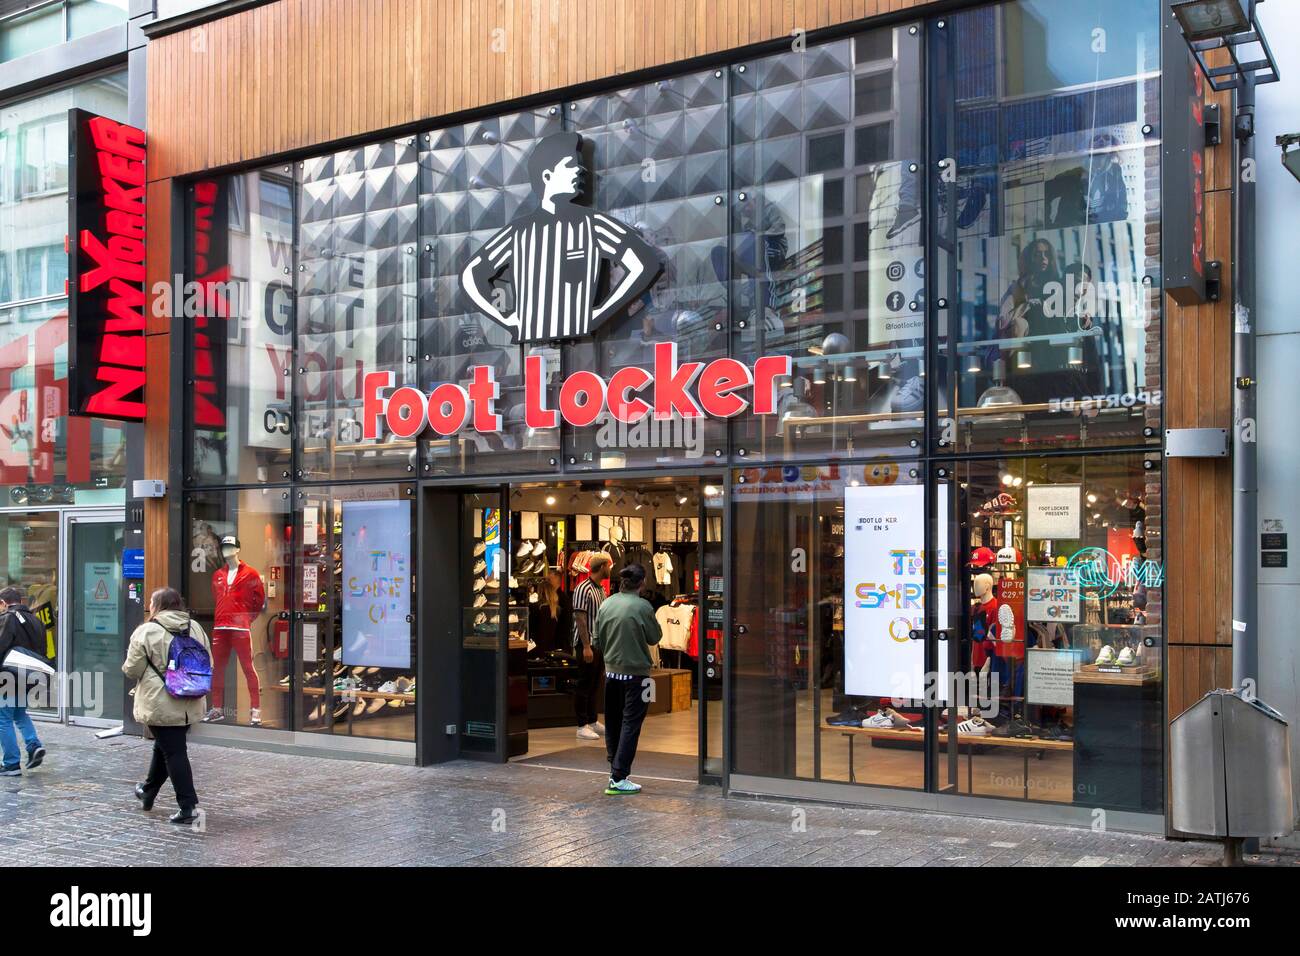 Foot Locker, shop for sportswear on the shopping street Hohe Strasse, Cologne, Germany.  Sportfachgeschaeft Foot Locker auf der Einkaufsstrasse Hohe S Stock Photo